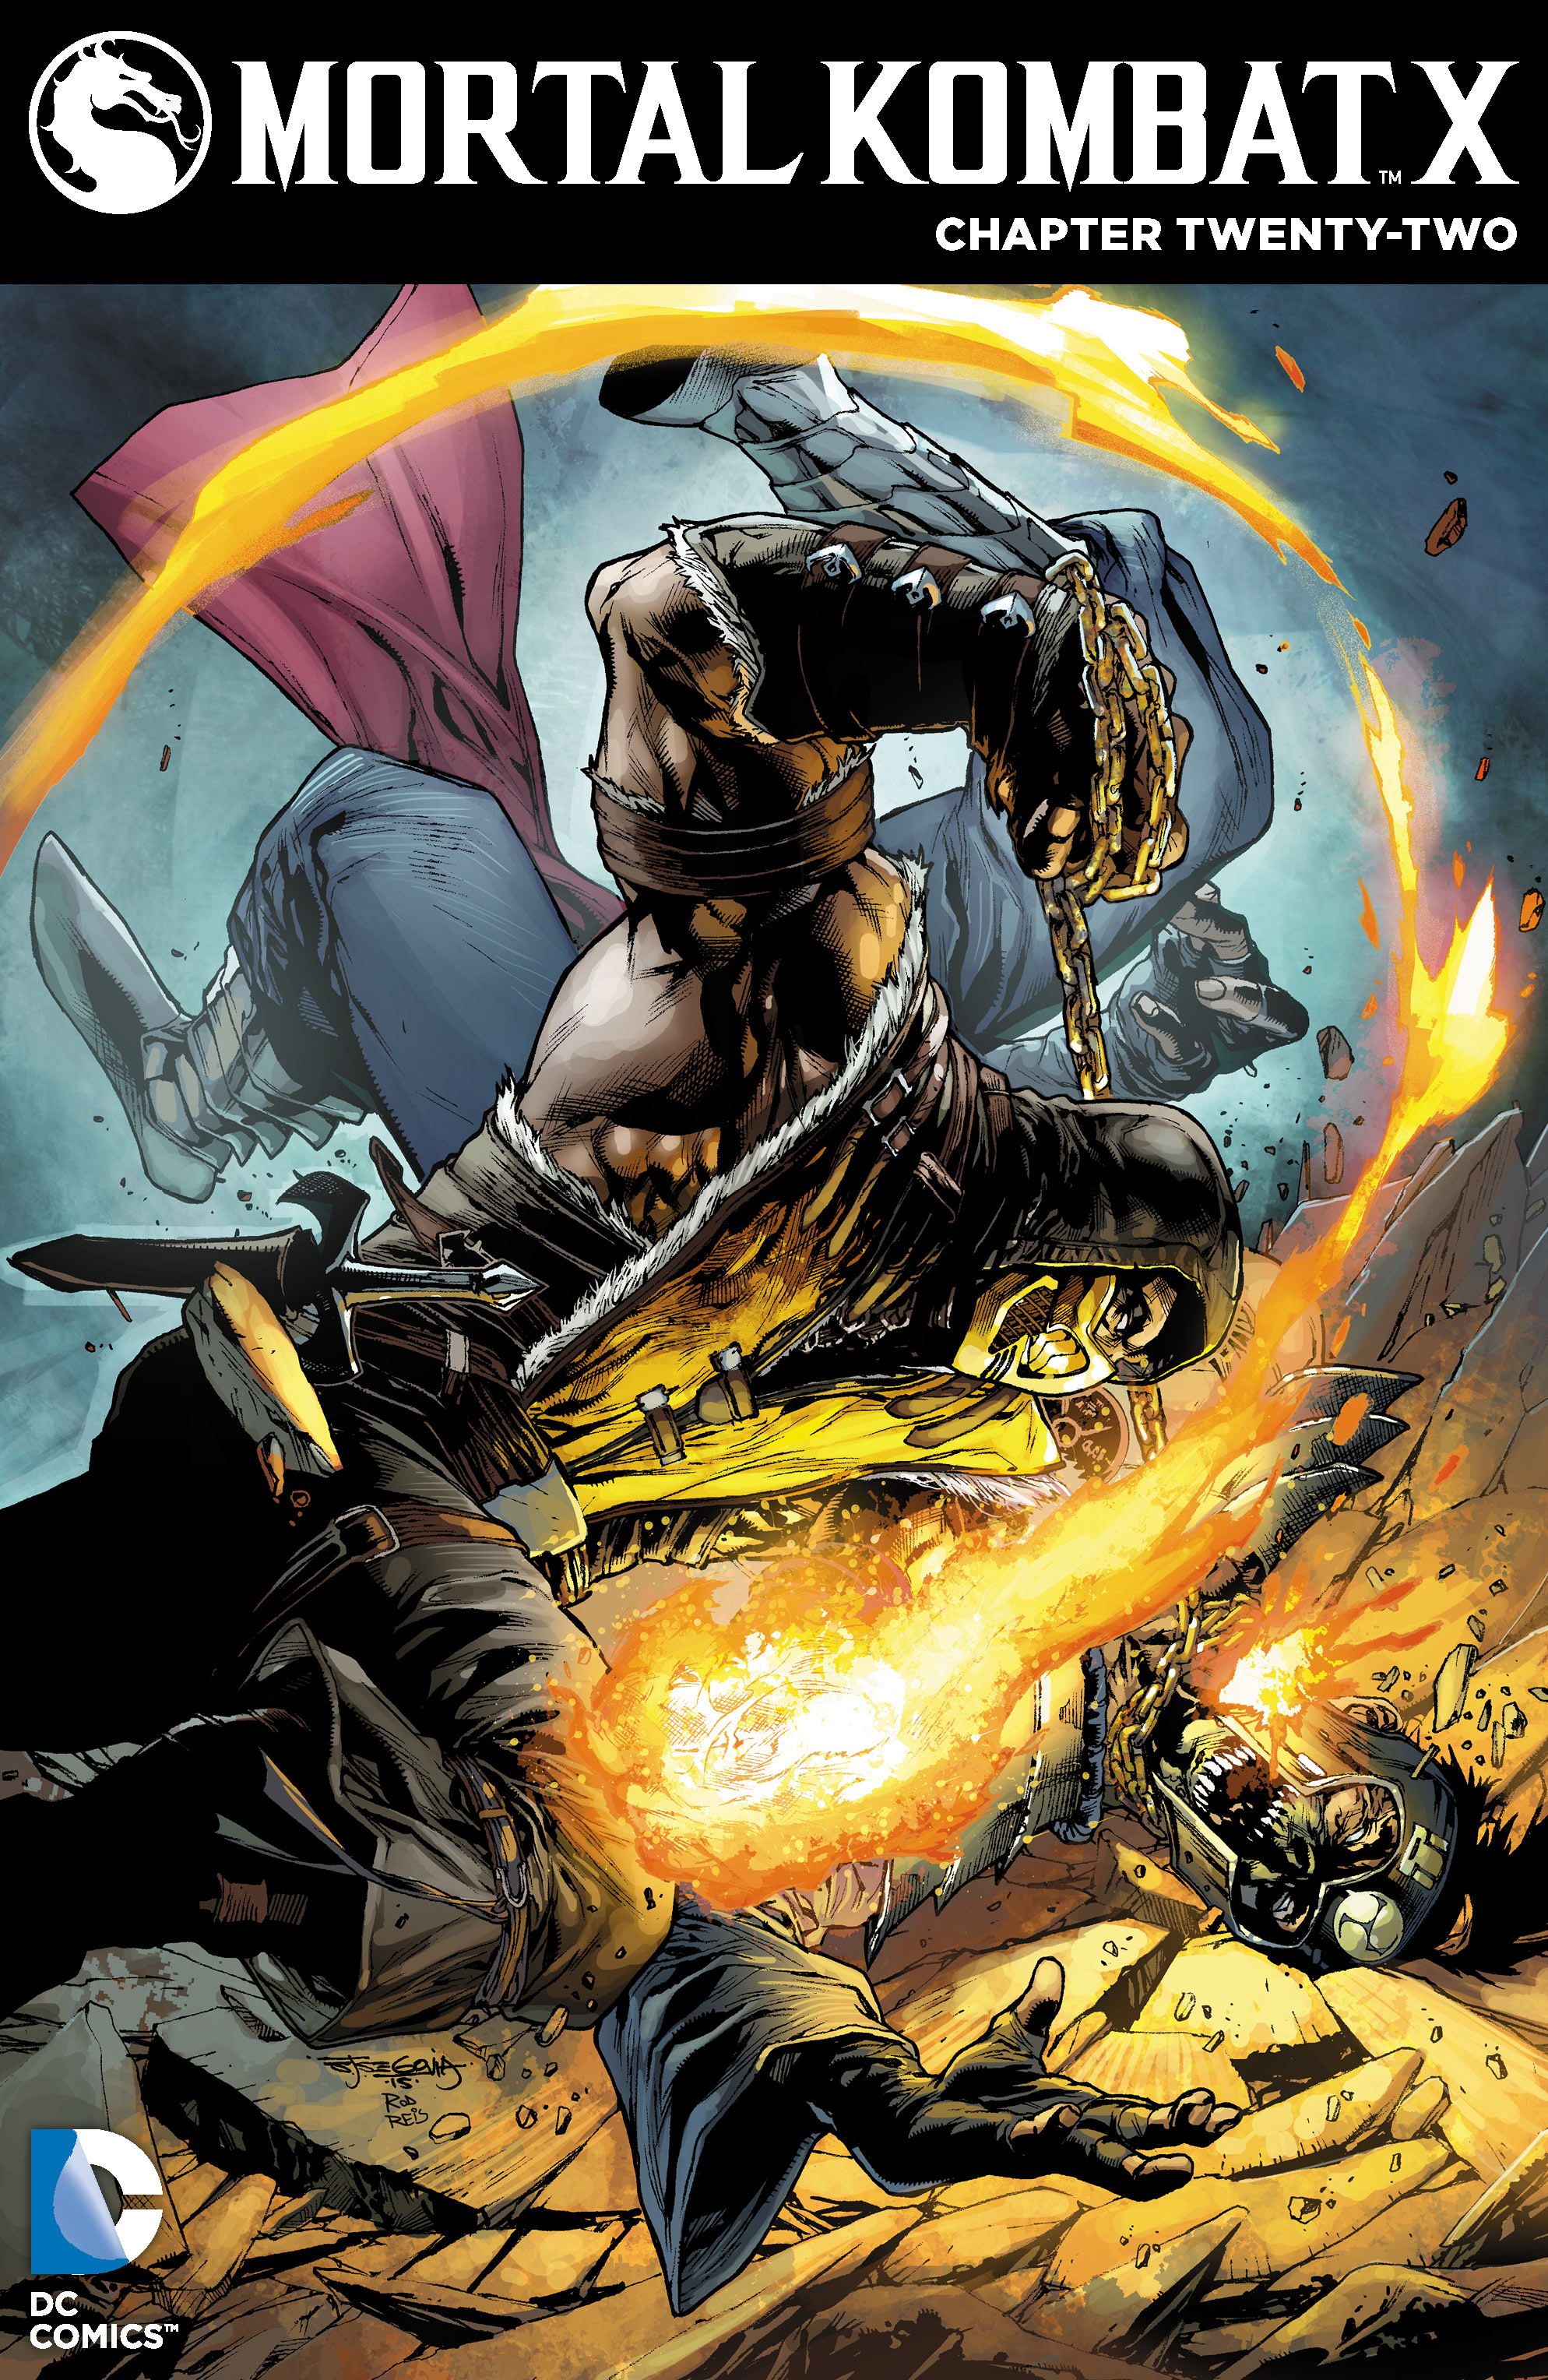 Mortal Kombat X #22 preview images